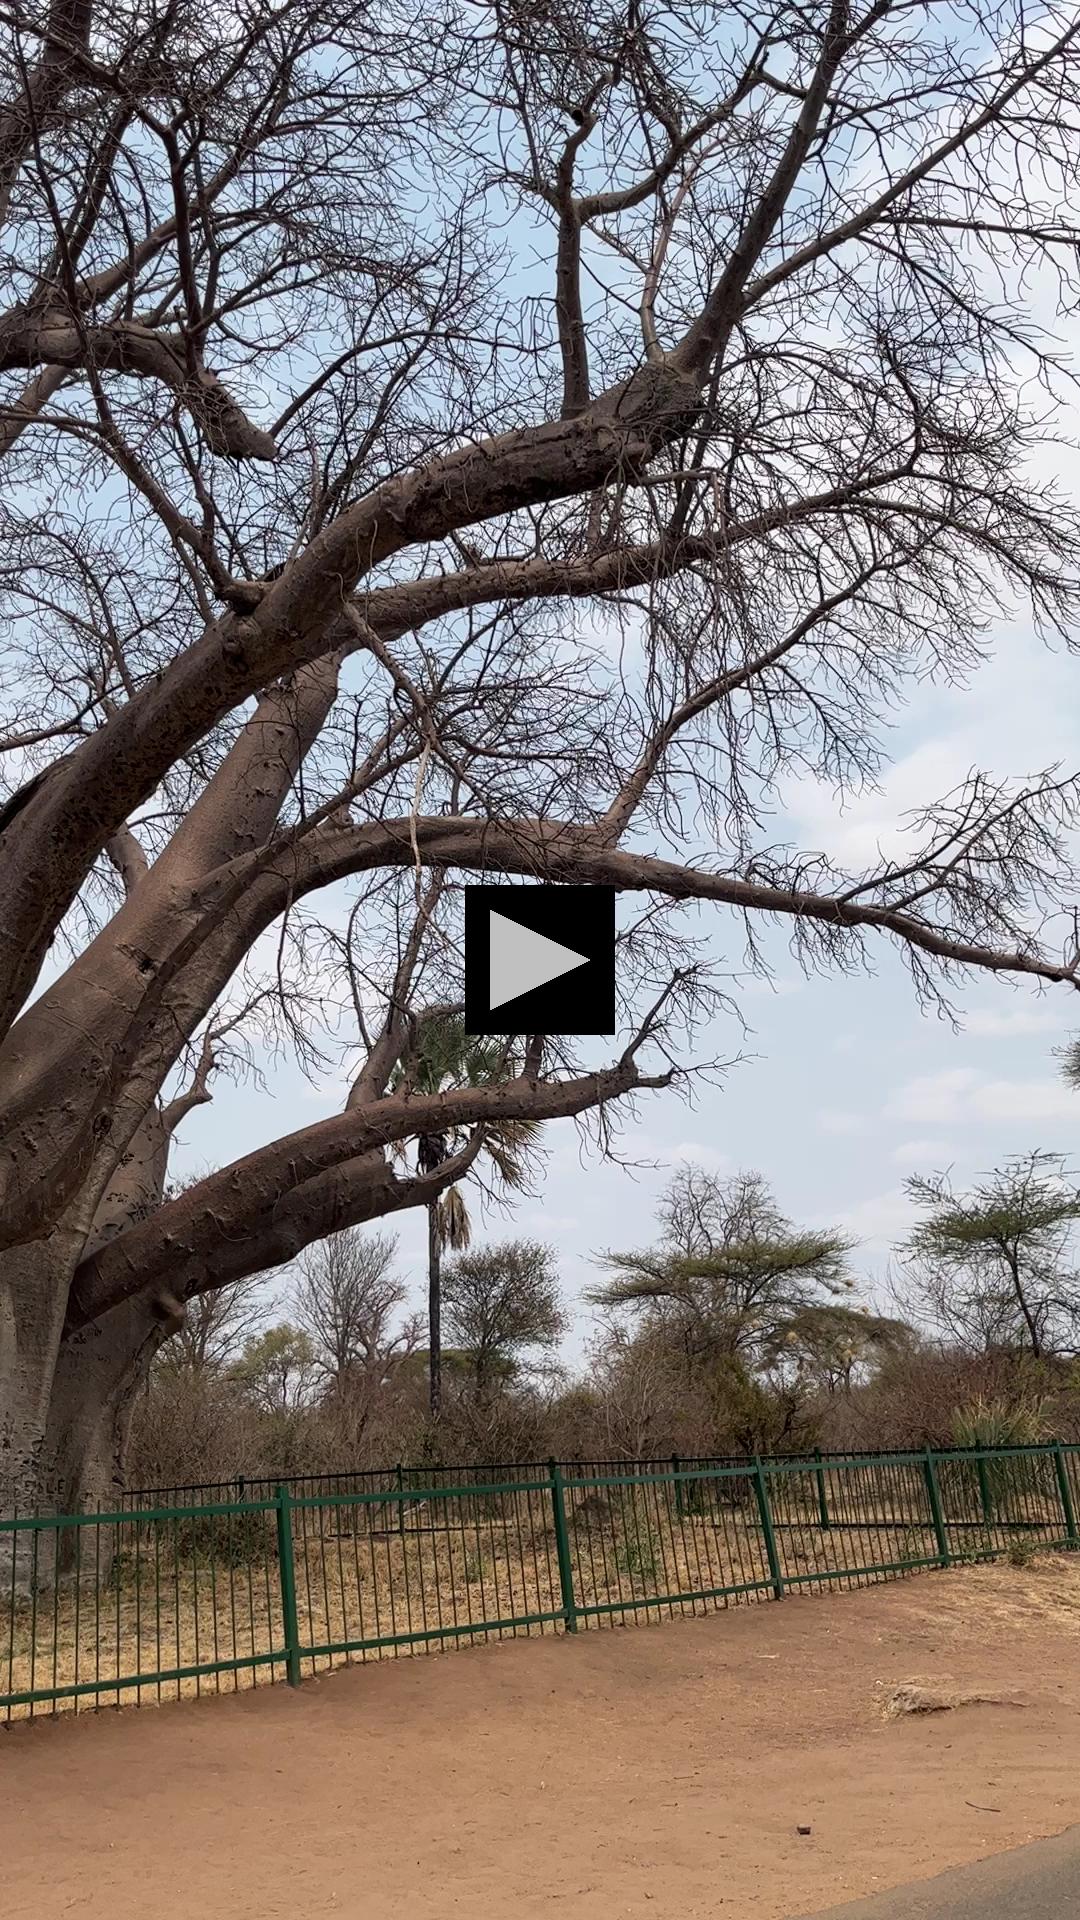 The Big Baobab Tree in Victoria Falls